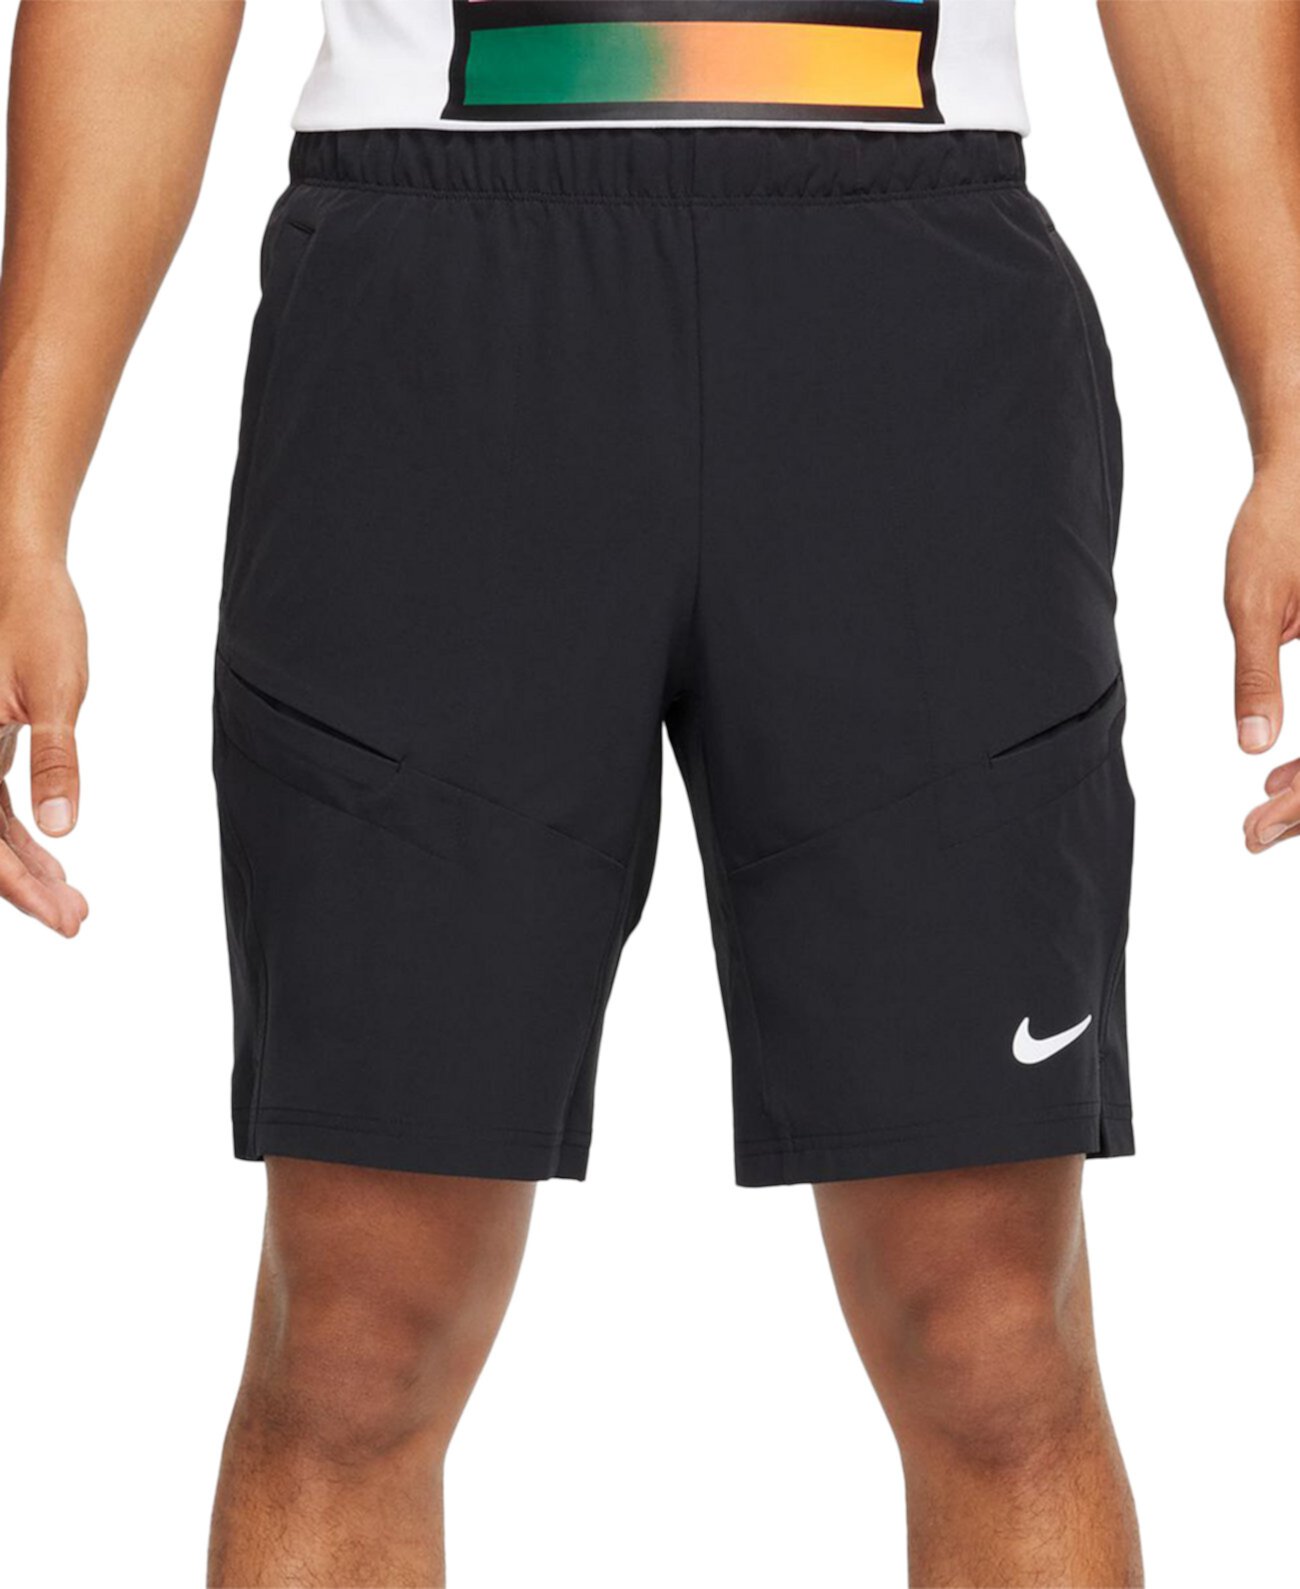 Men's Advantage 9" Tennis Shorts Nike